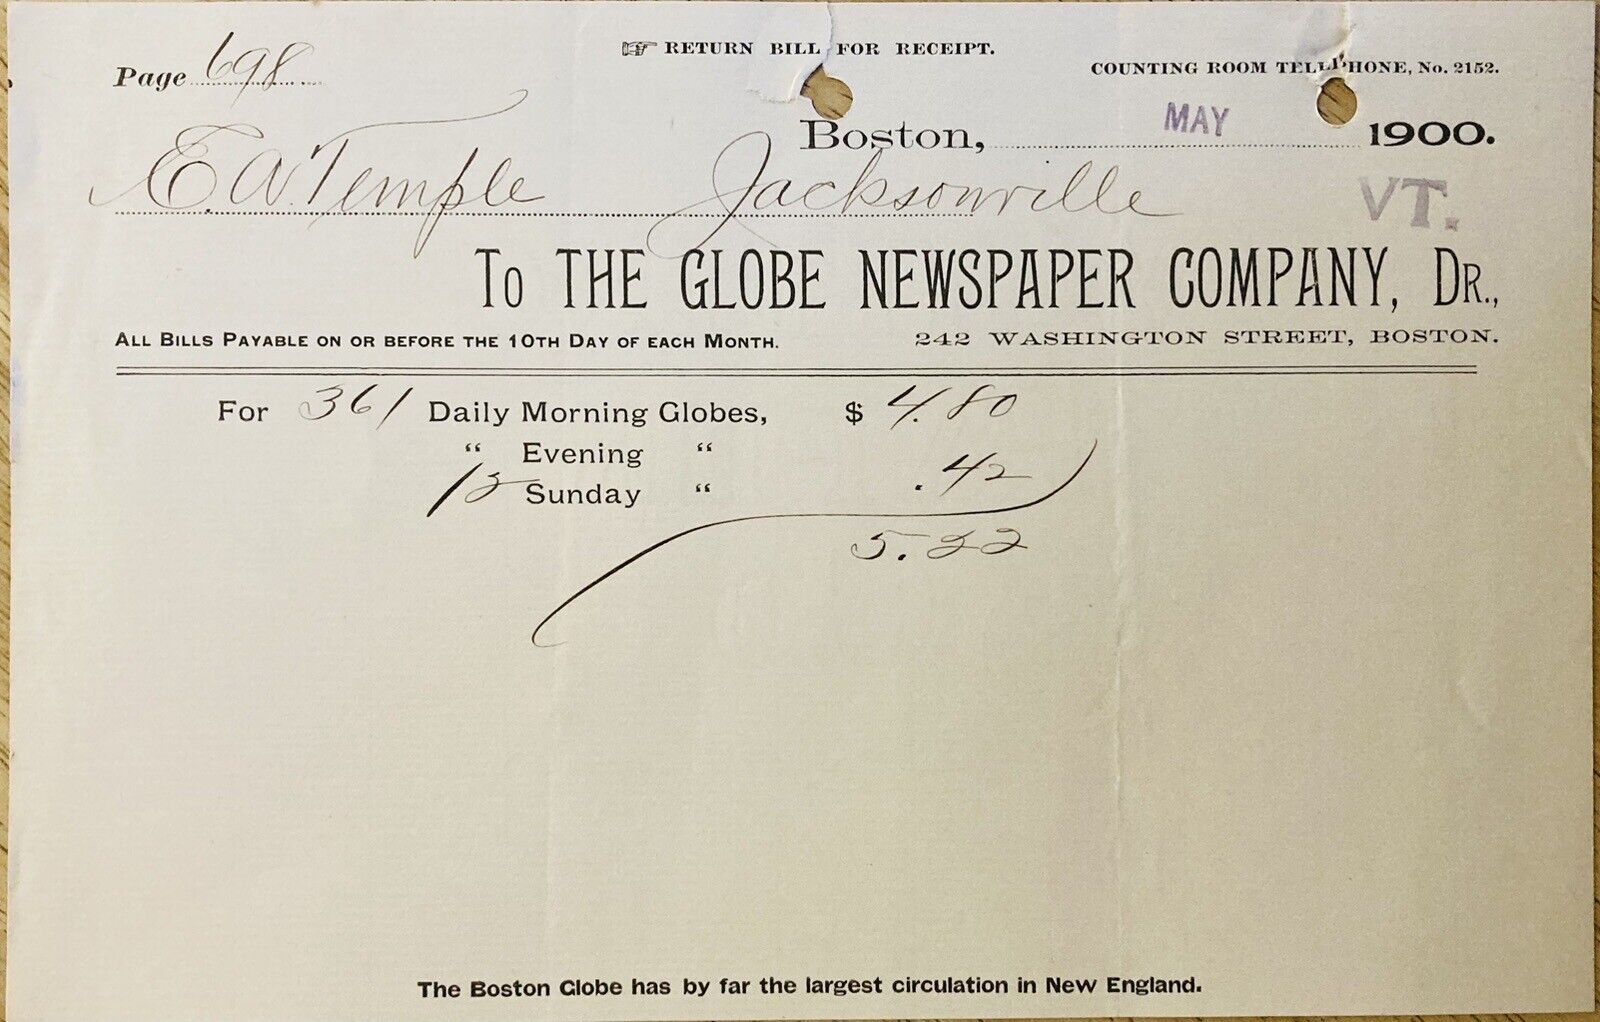 1900 BILLHEAD~THE GLOBE NEWSPAPER CO. WASHINGTON ST. BOSTON. DELIVERY BILL COST~